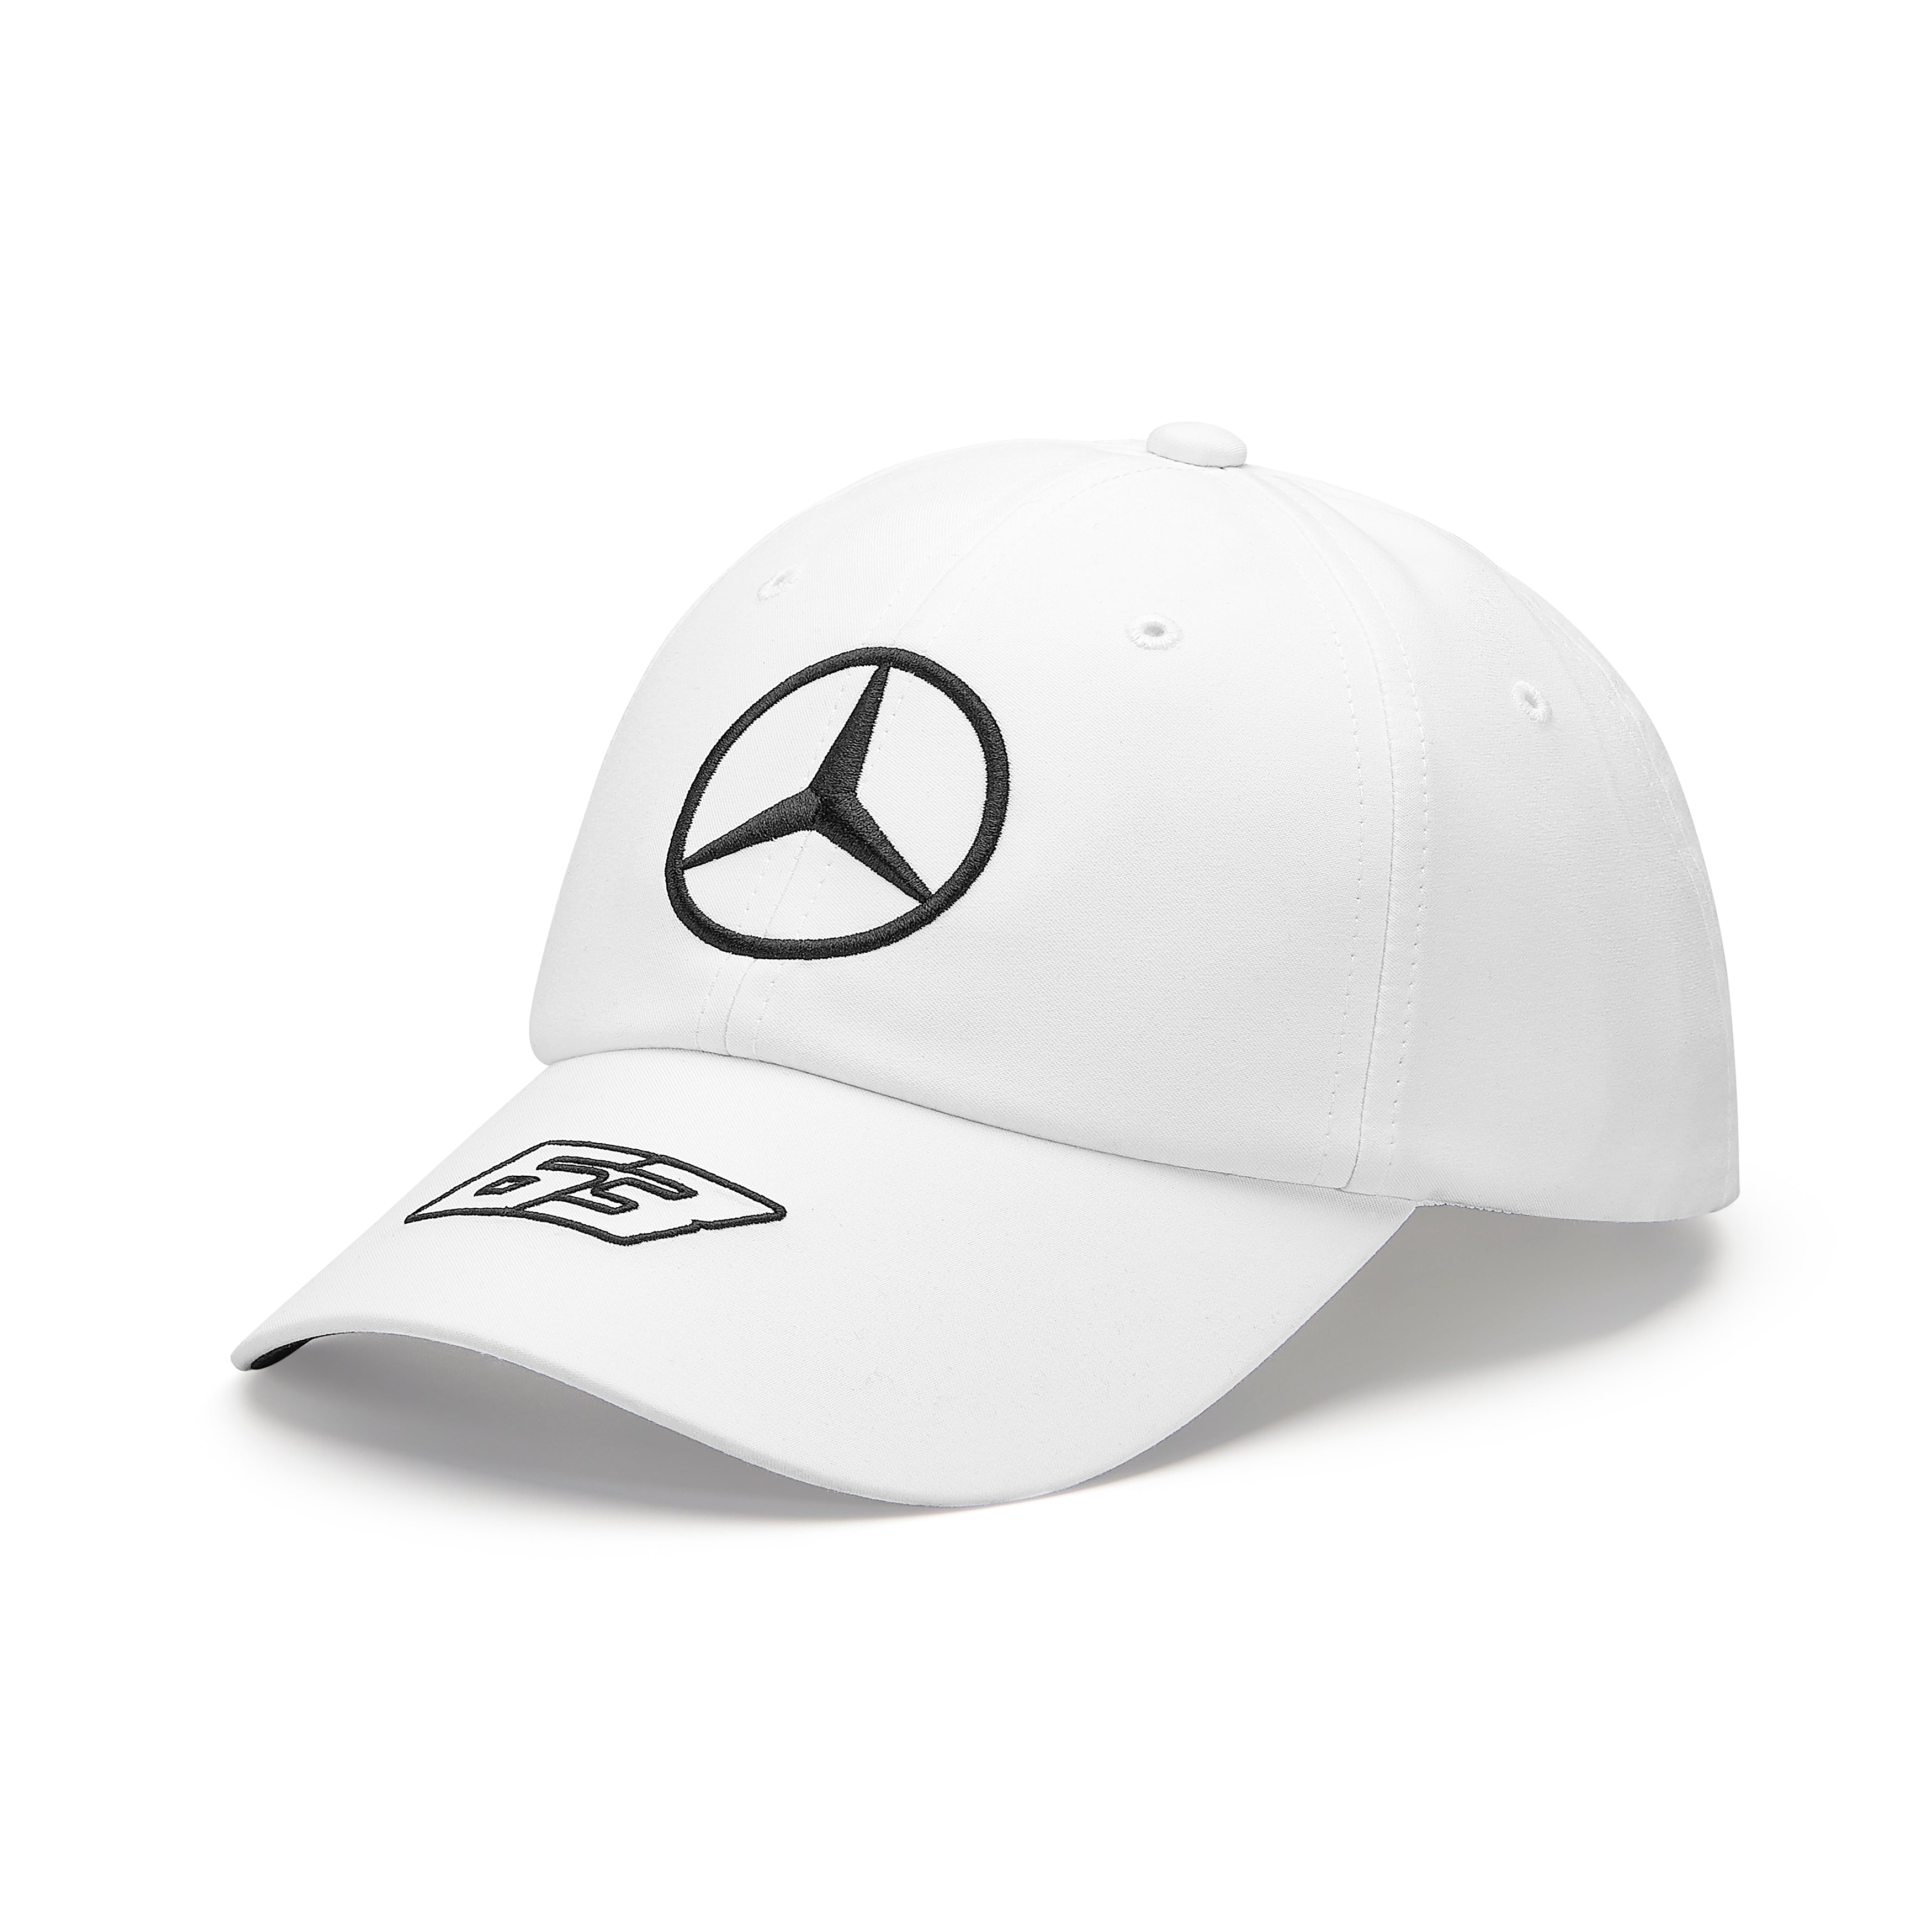 Mercedes 2023 George Russell Team Caps Hvit Barn